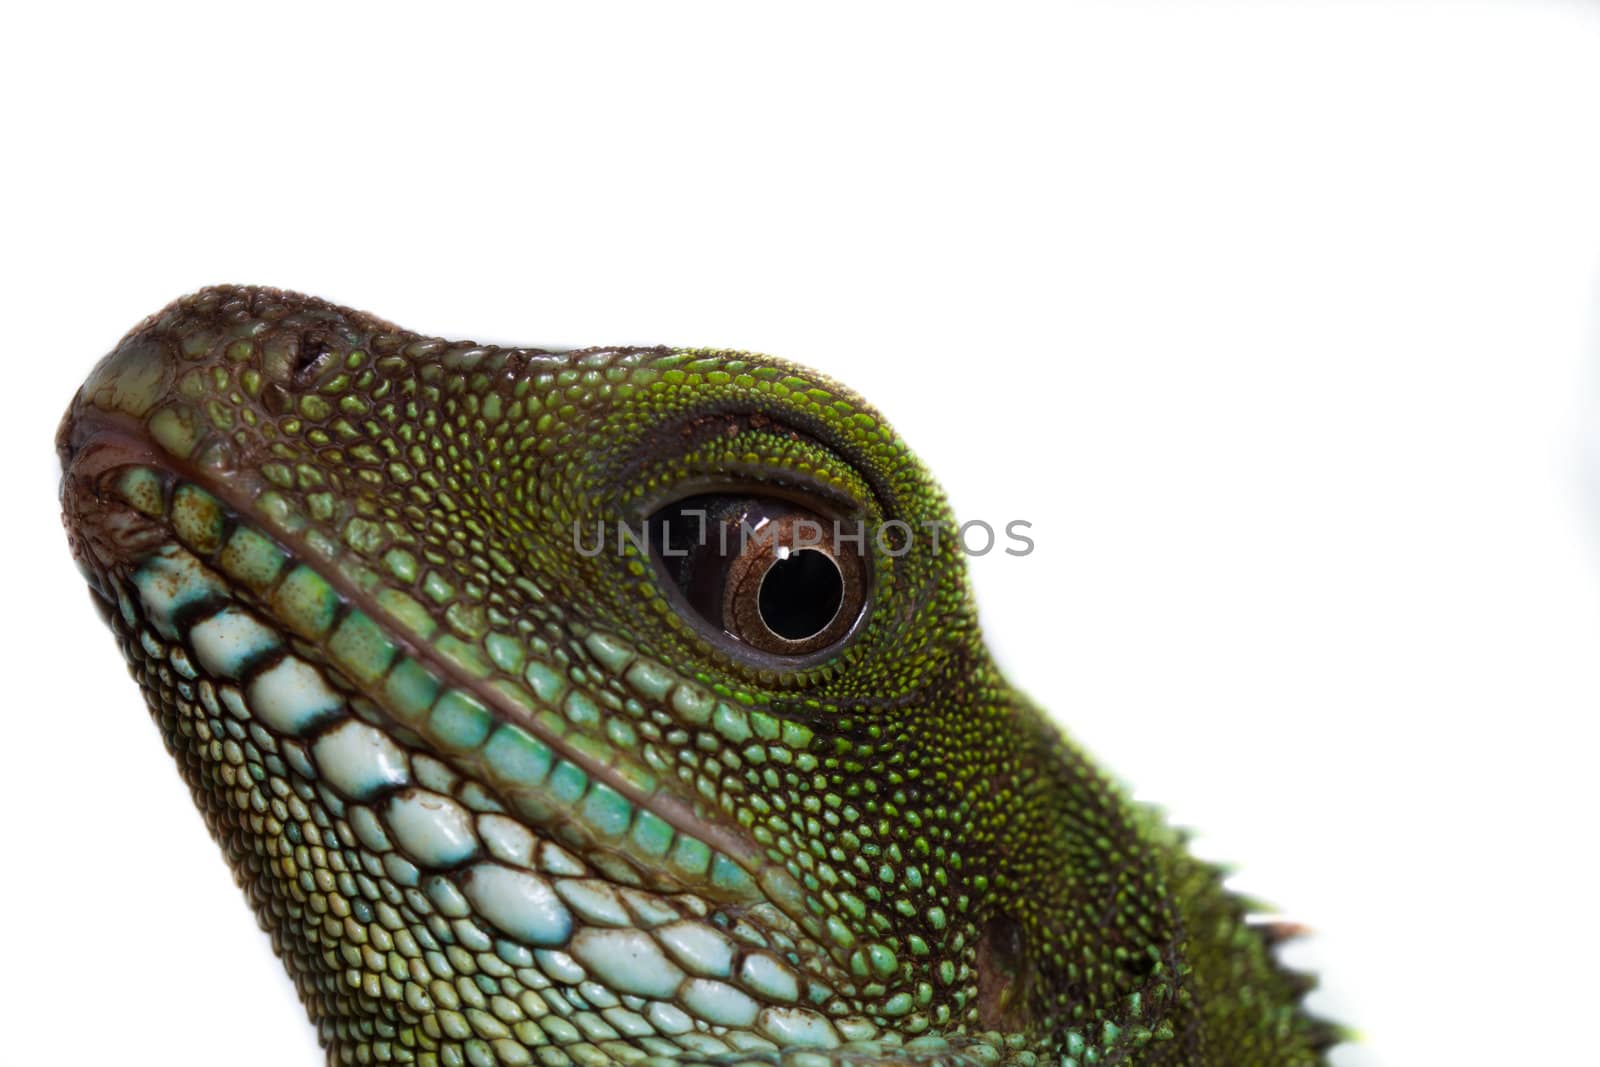 Head and eye of an adult agama (Physignathus cocincinu) by NagyDodo